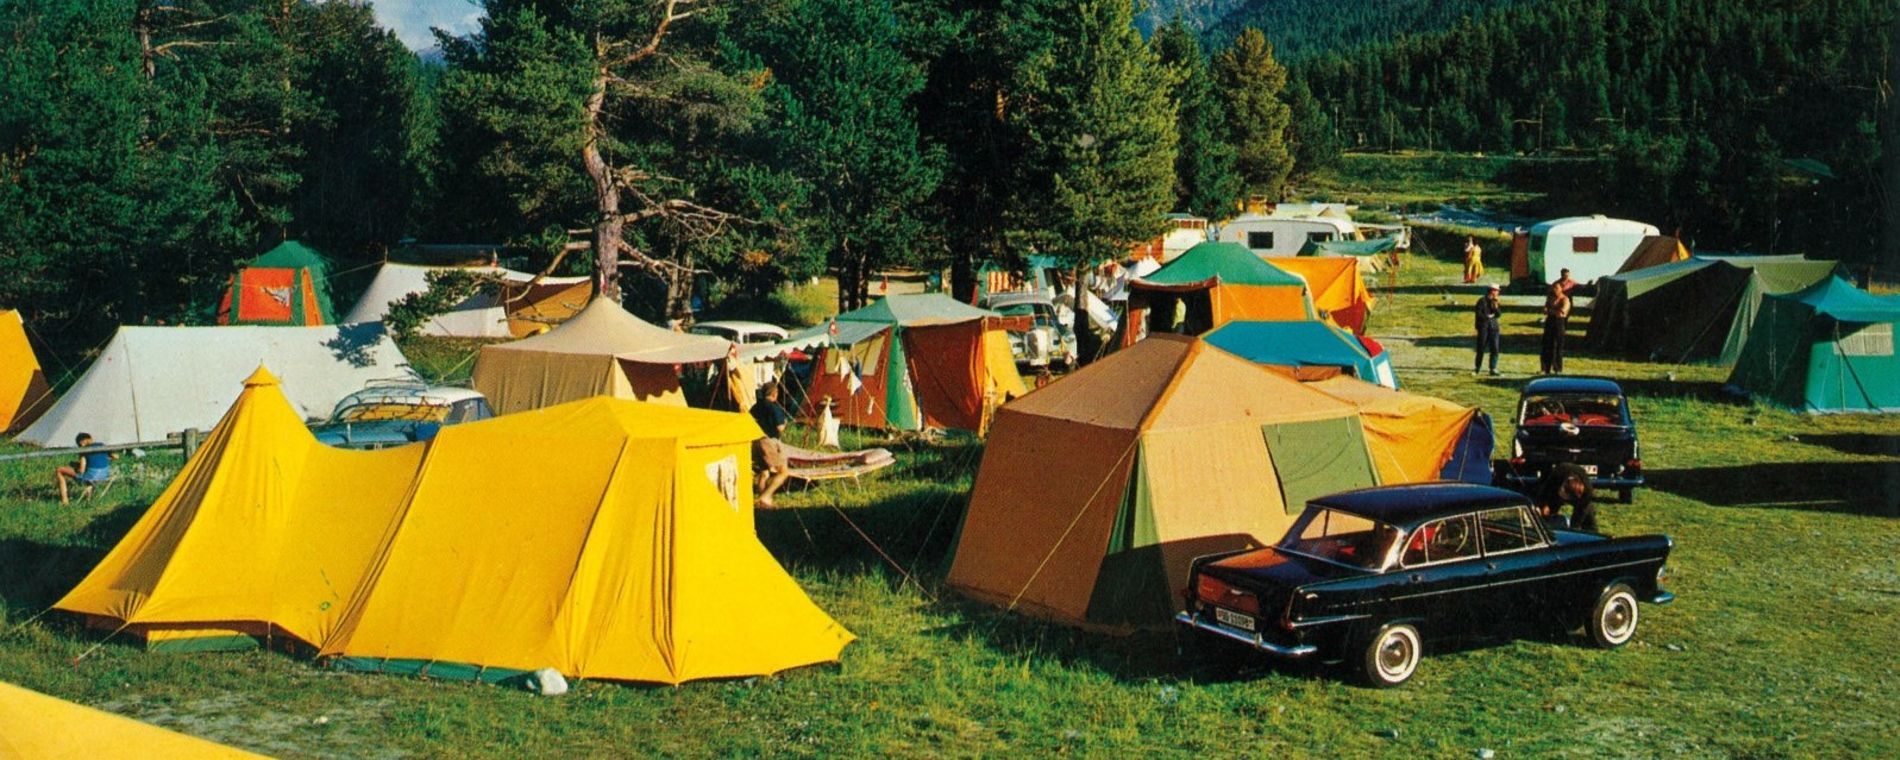 TCS Camping fête ses 75 ans